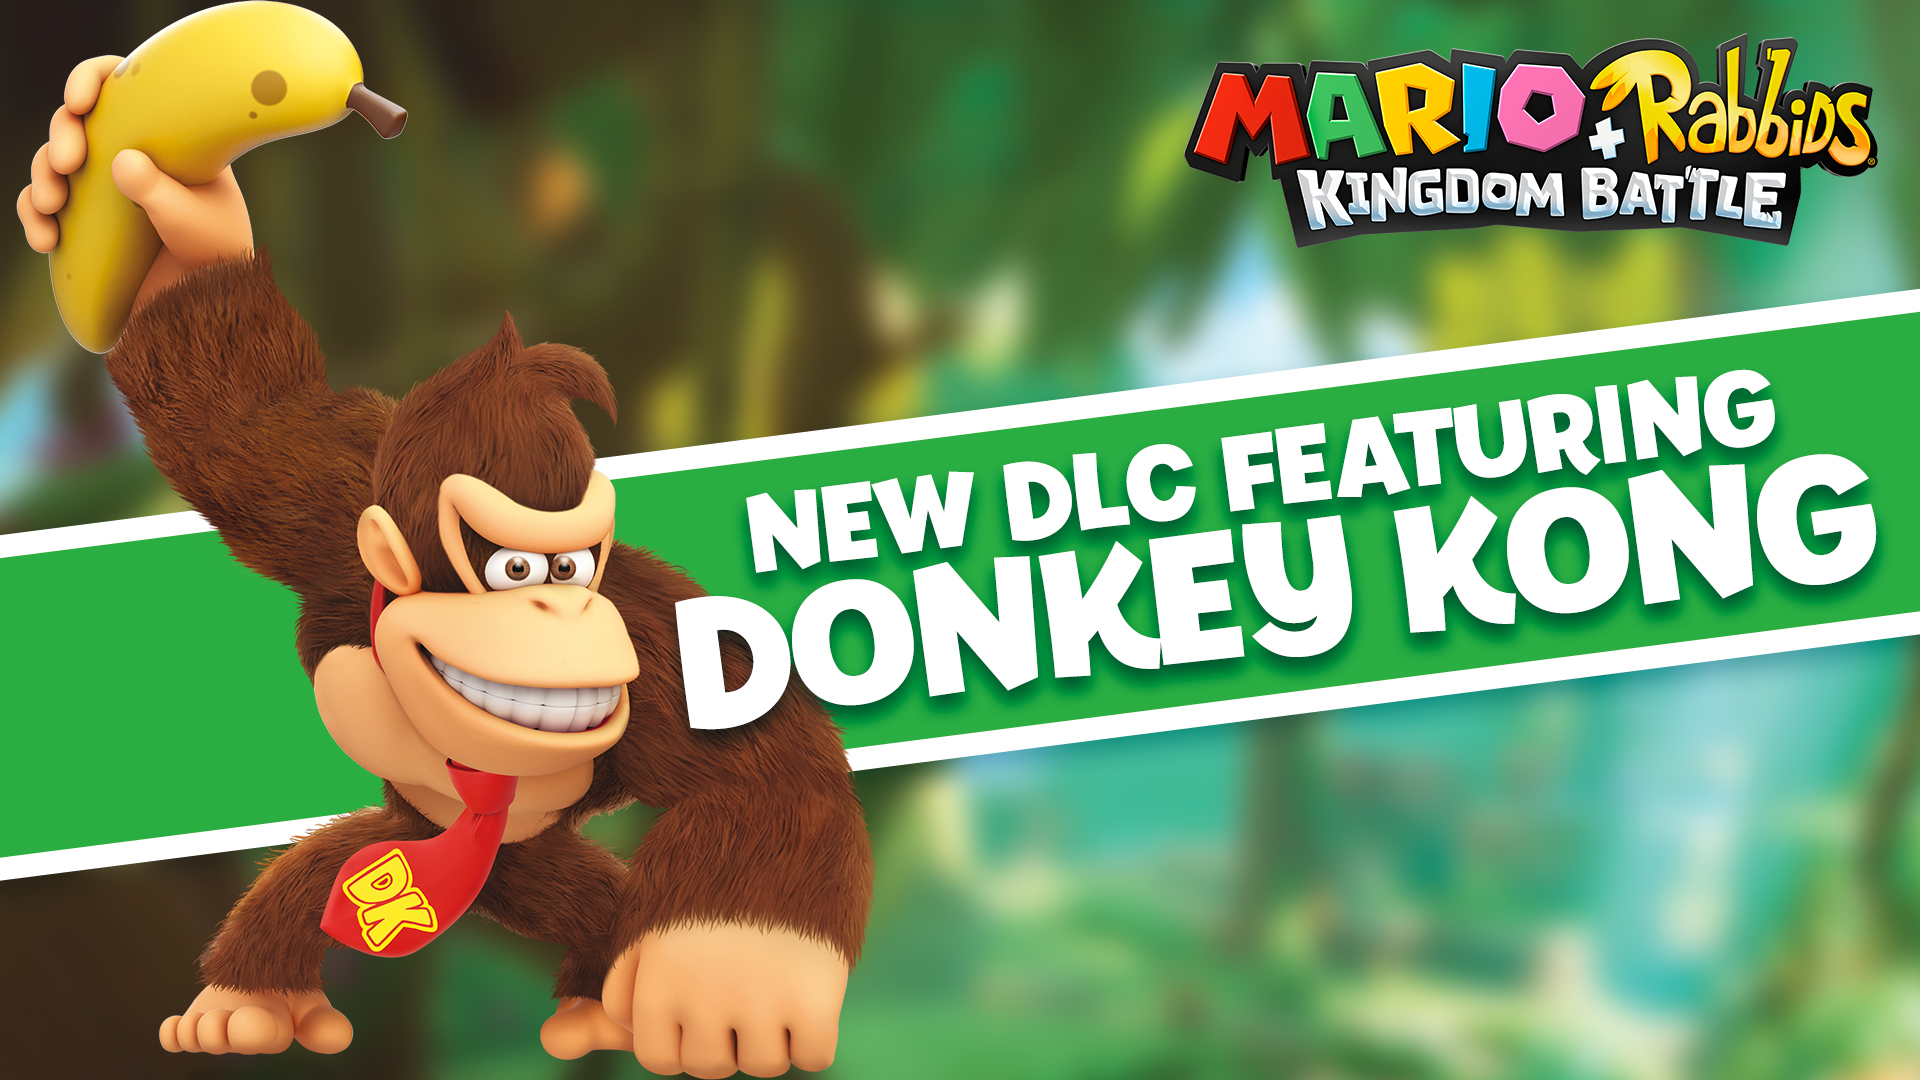 Mario + Rabbids® Kingdom Battle Donkey Kong Adventure for Nintendo Switch -  Nintendo Official Site